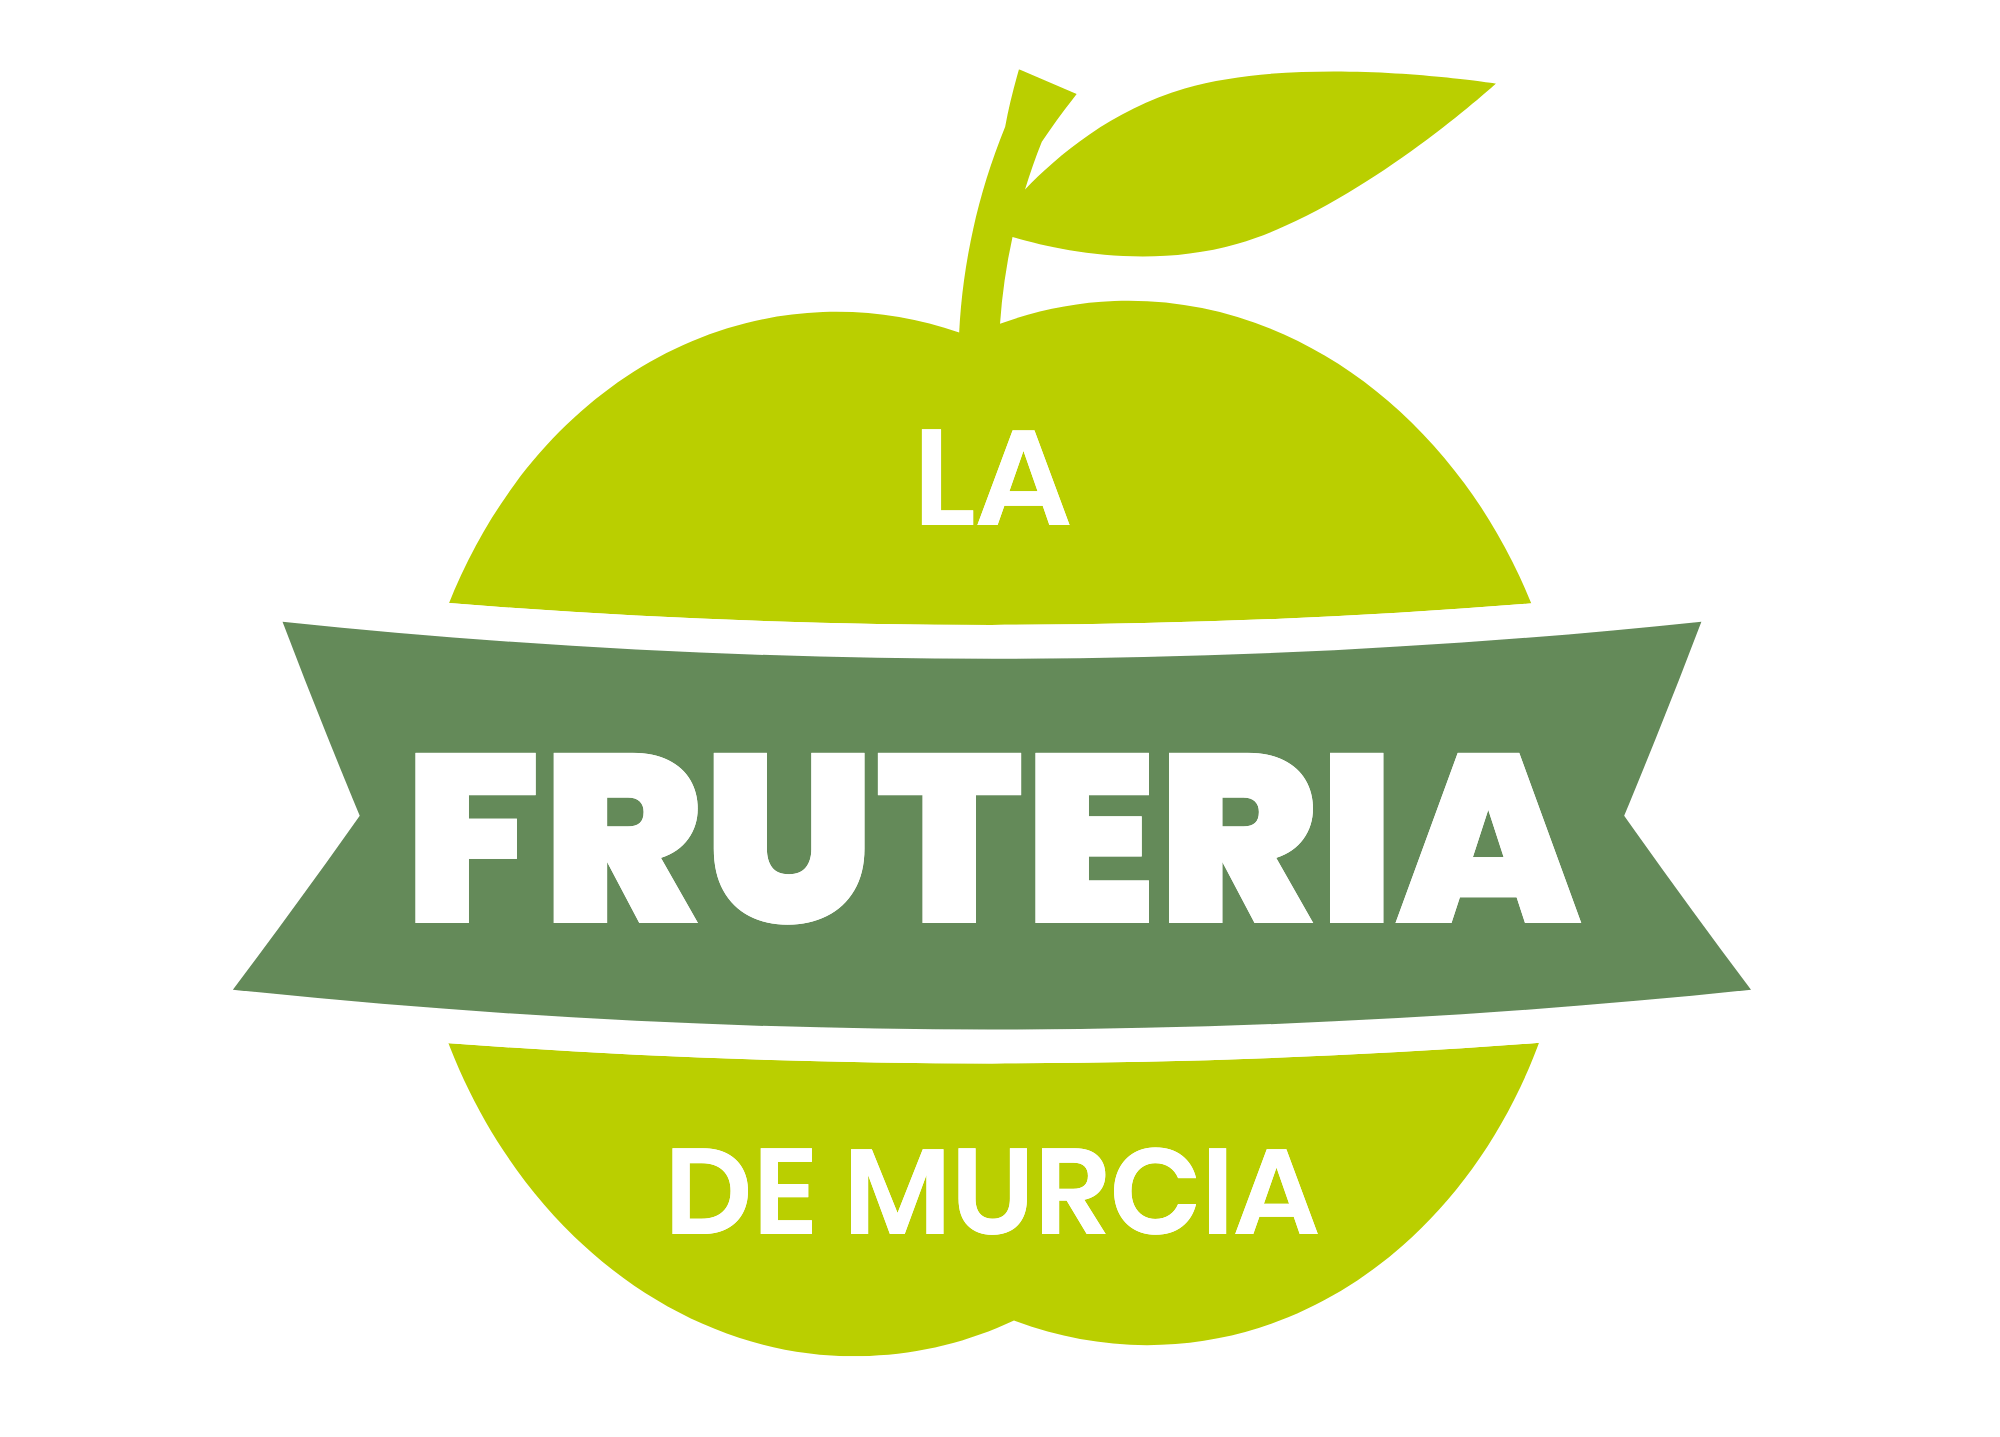 La Fruteria de Murcia